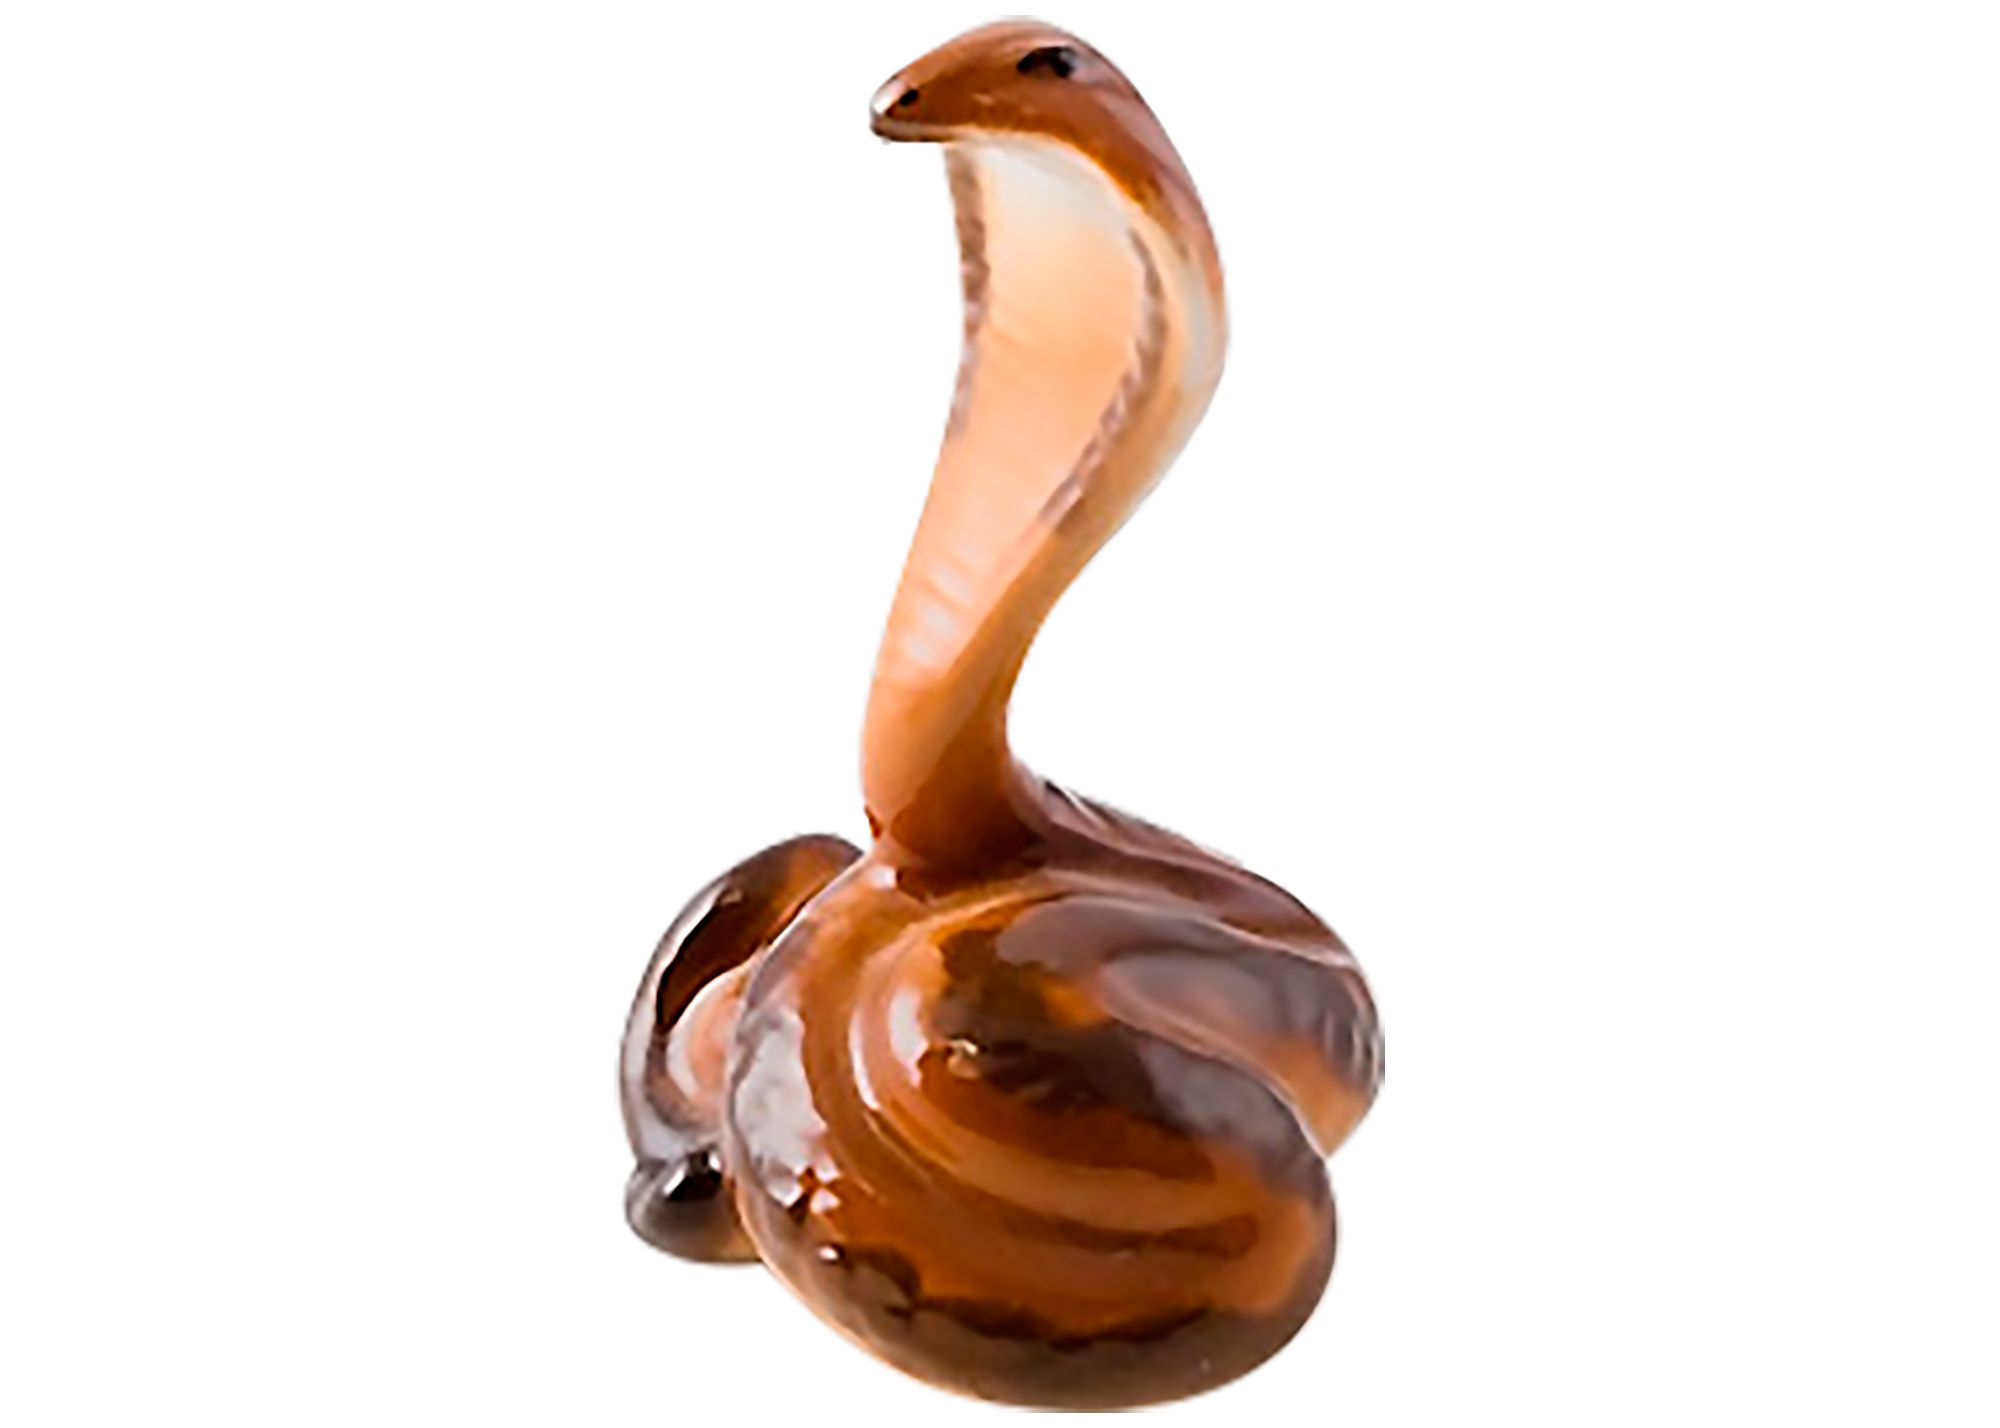 Buy Medium Cobra Figurine at GoldenCockerel.com